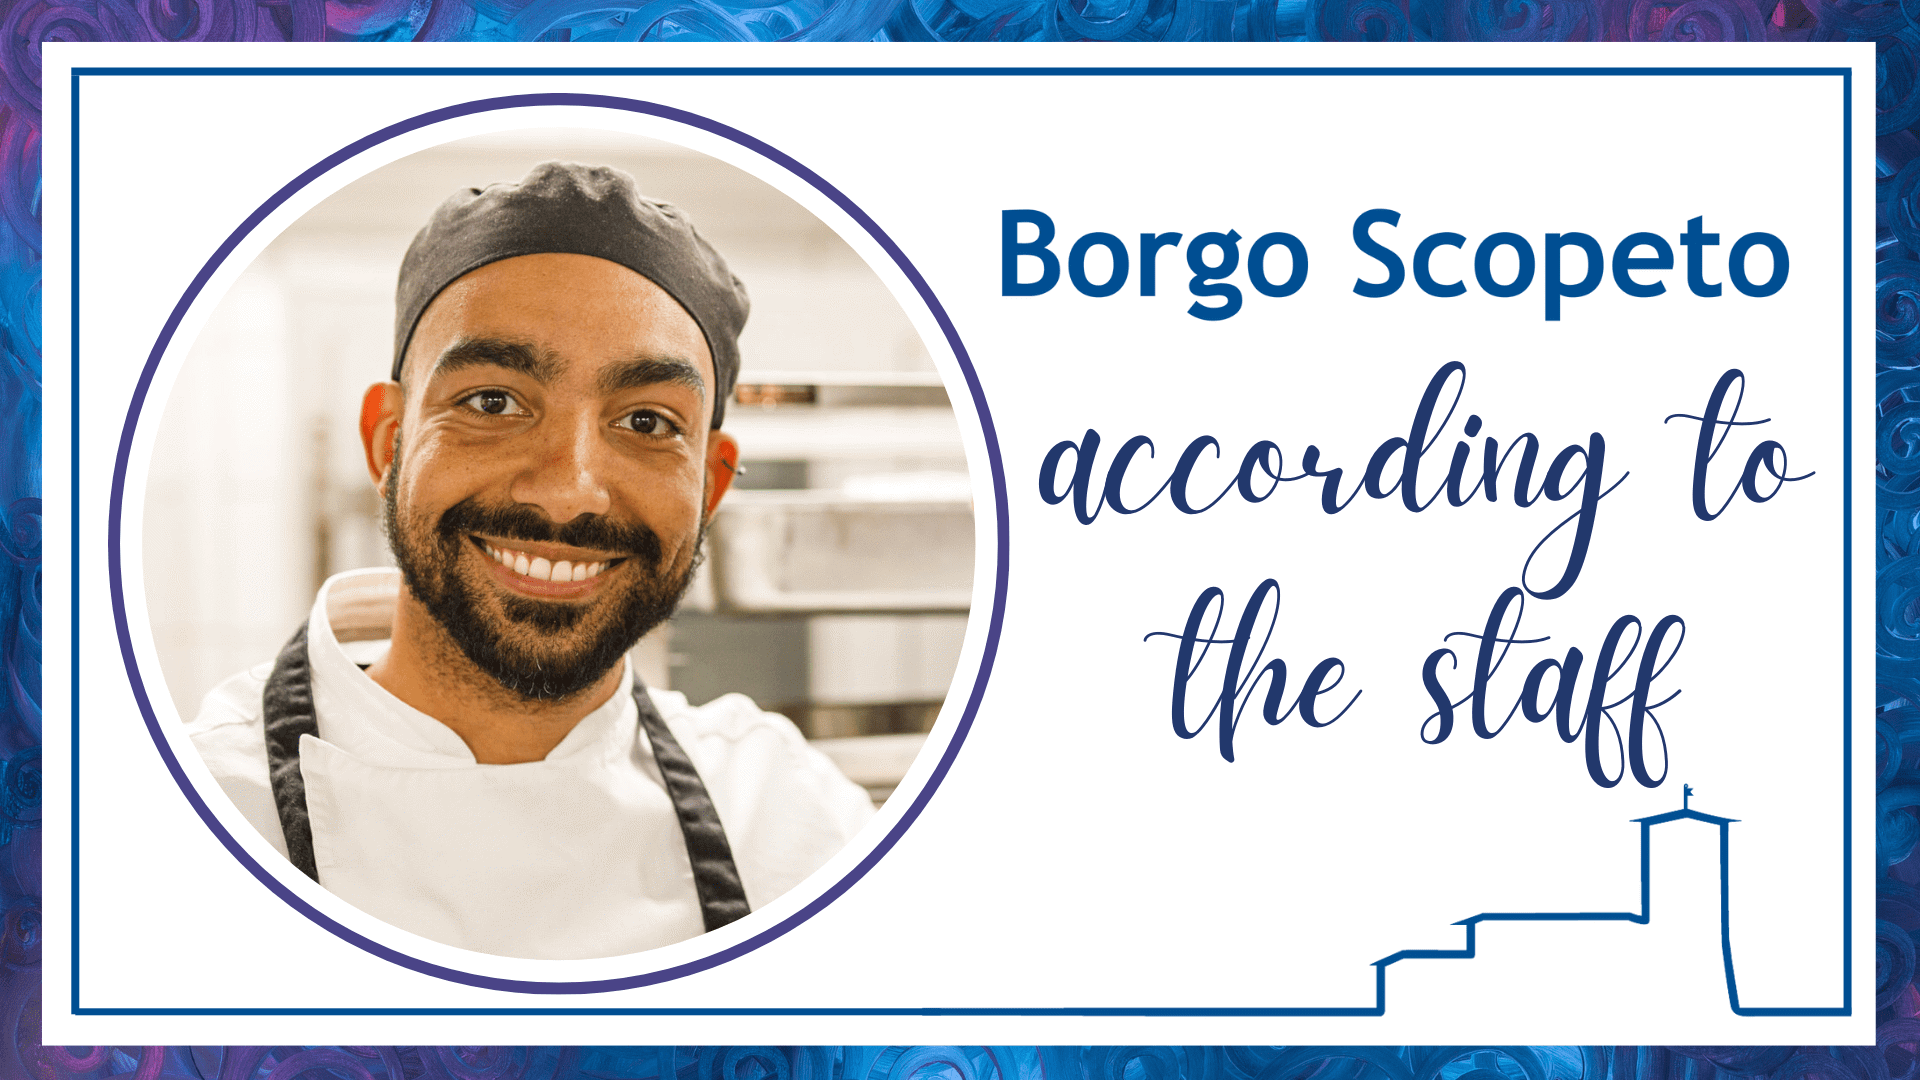 Borgo Scopeto according to the staff - Samuel 2